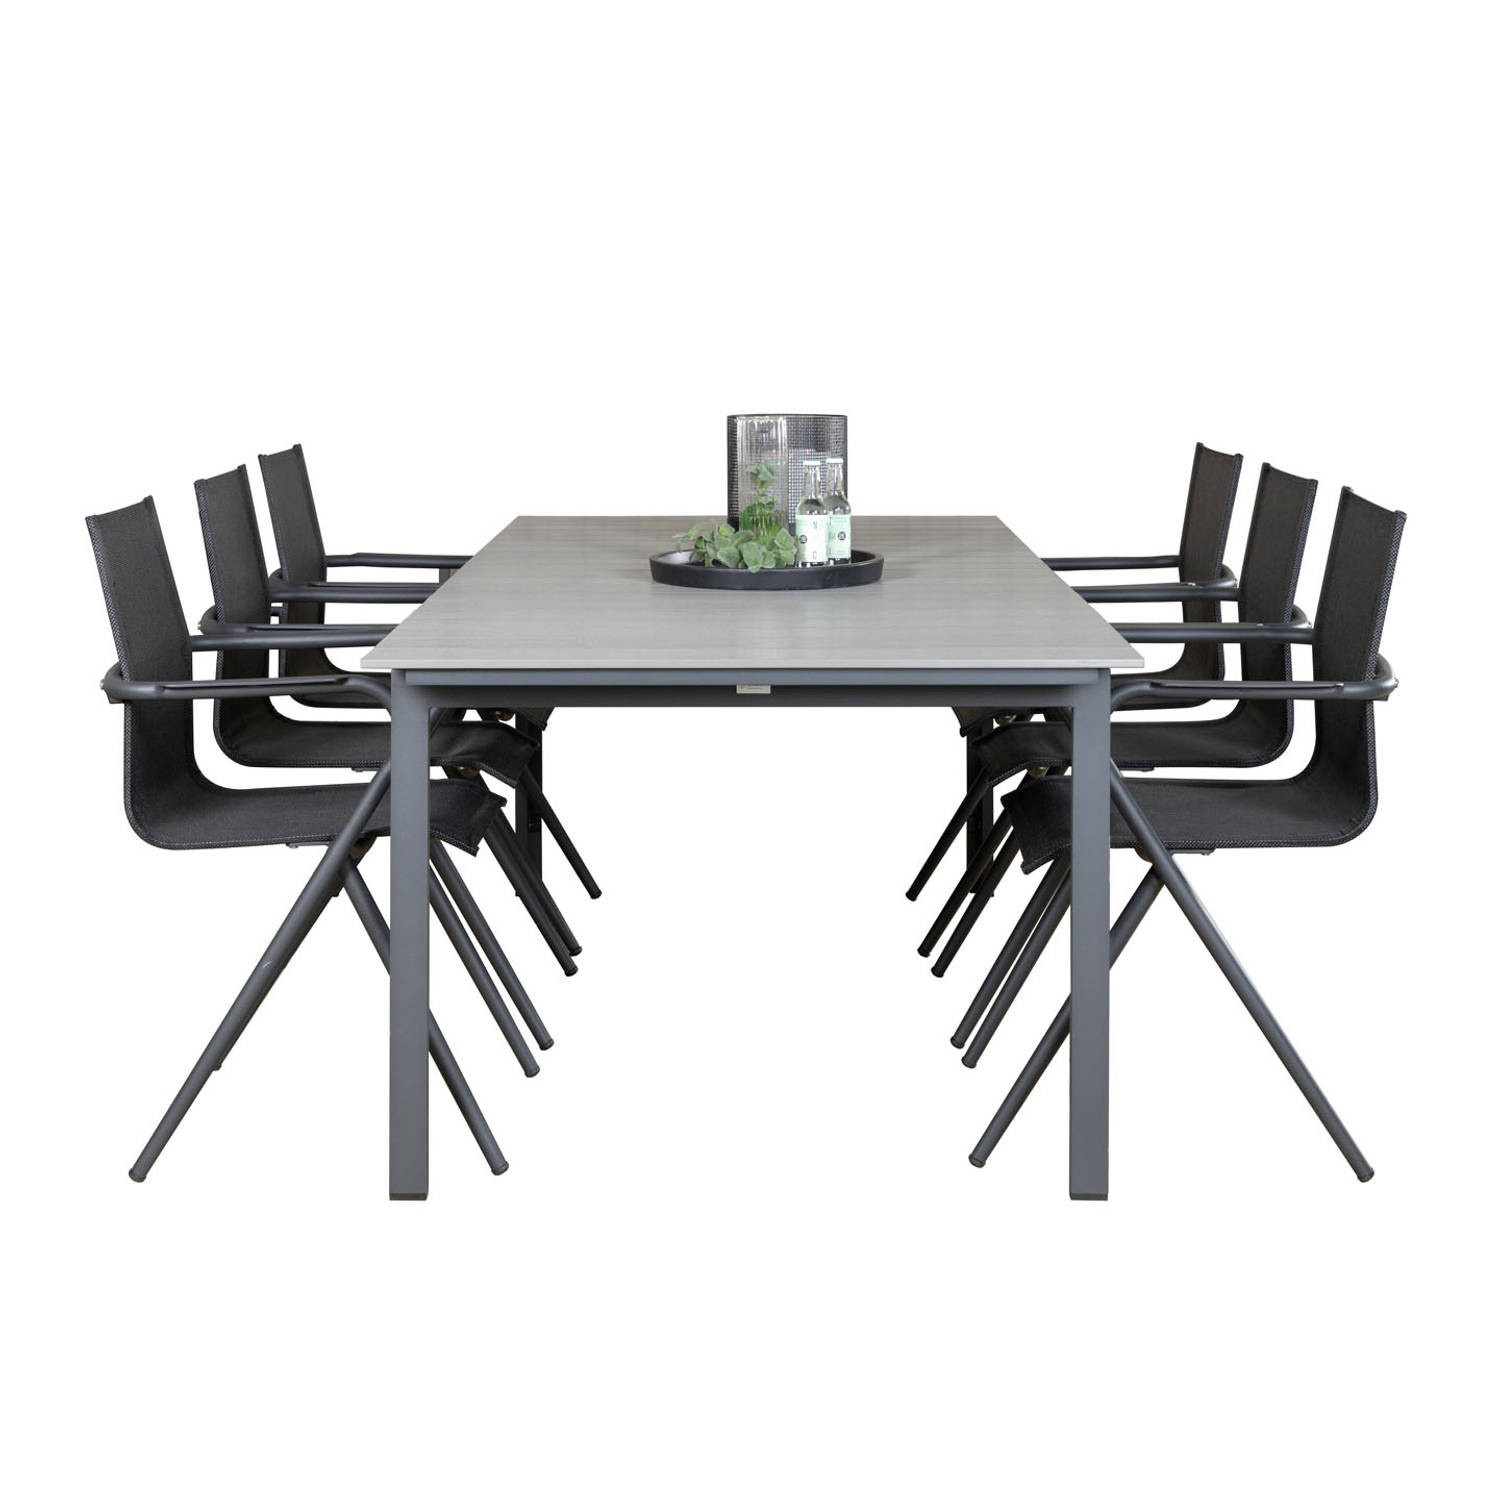 Levels tuinmeubelset tafel 100x229/310cm en 6 stoel Alina zwart, grijs.